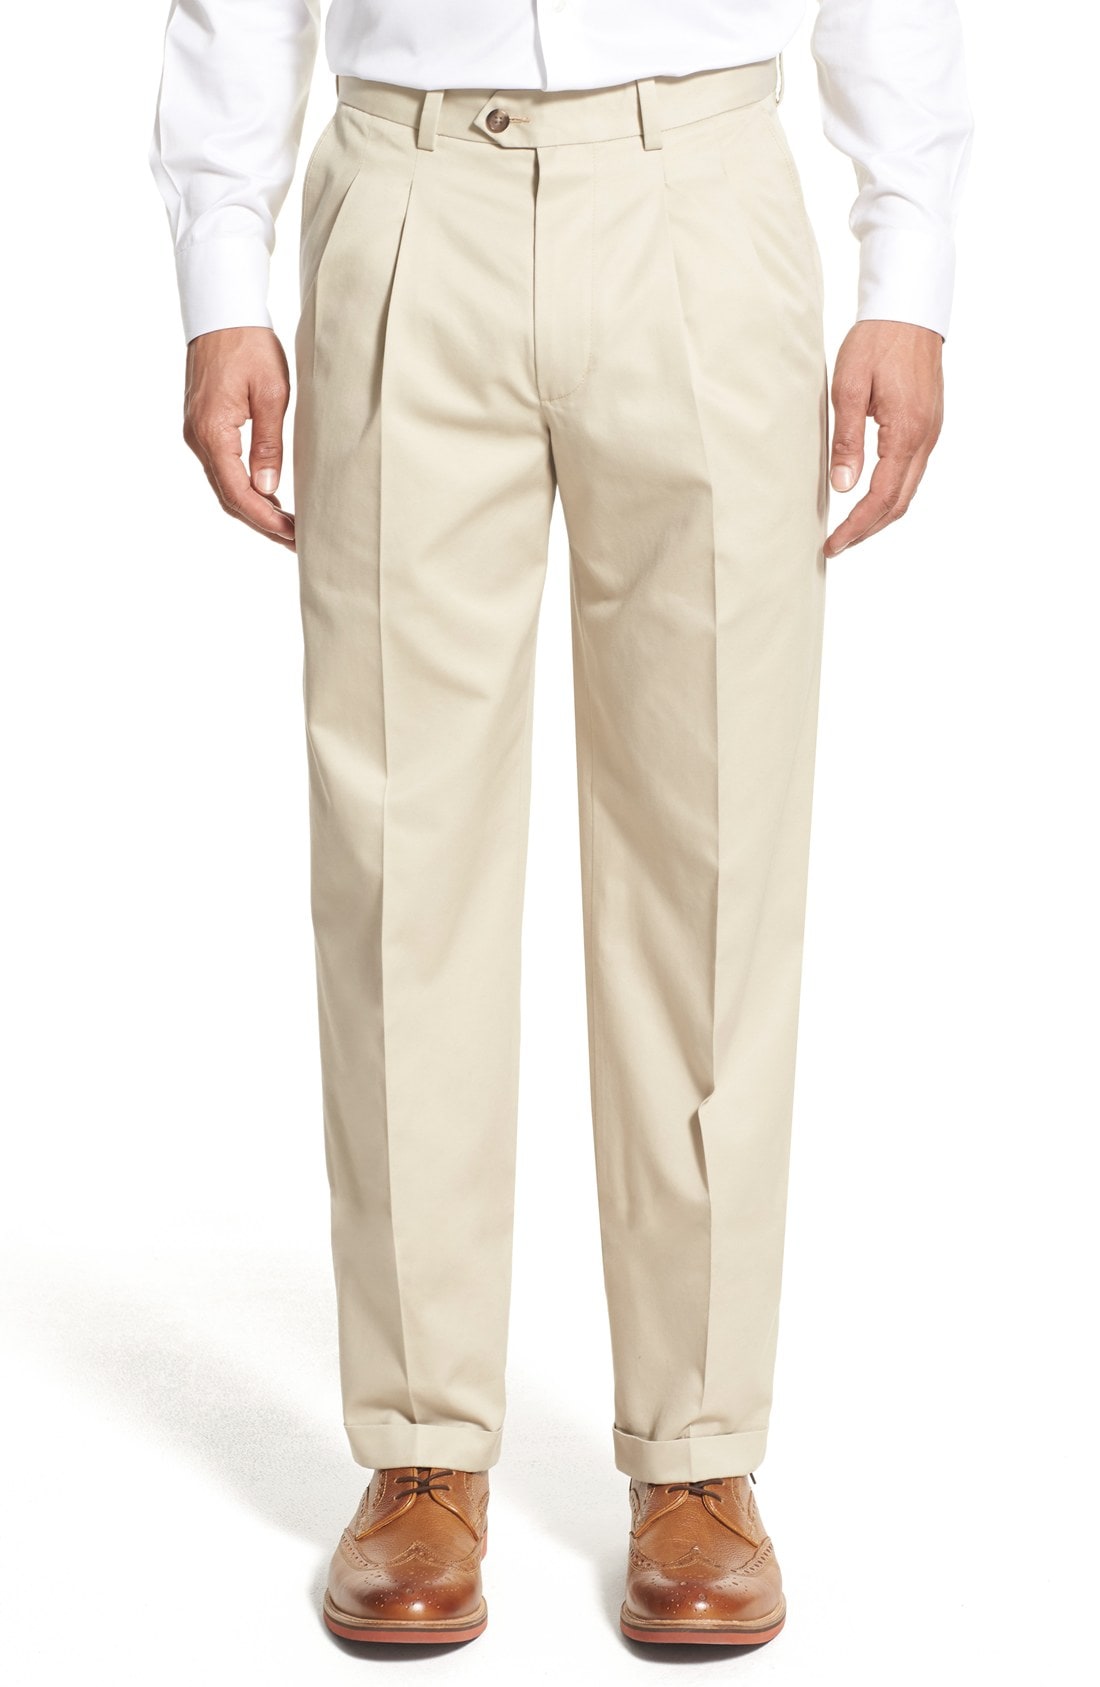 Nordstrom Men's Shop Classic Smartcare Supima Cotton Pleated Trousers